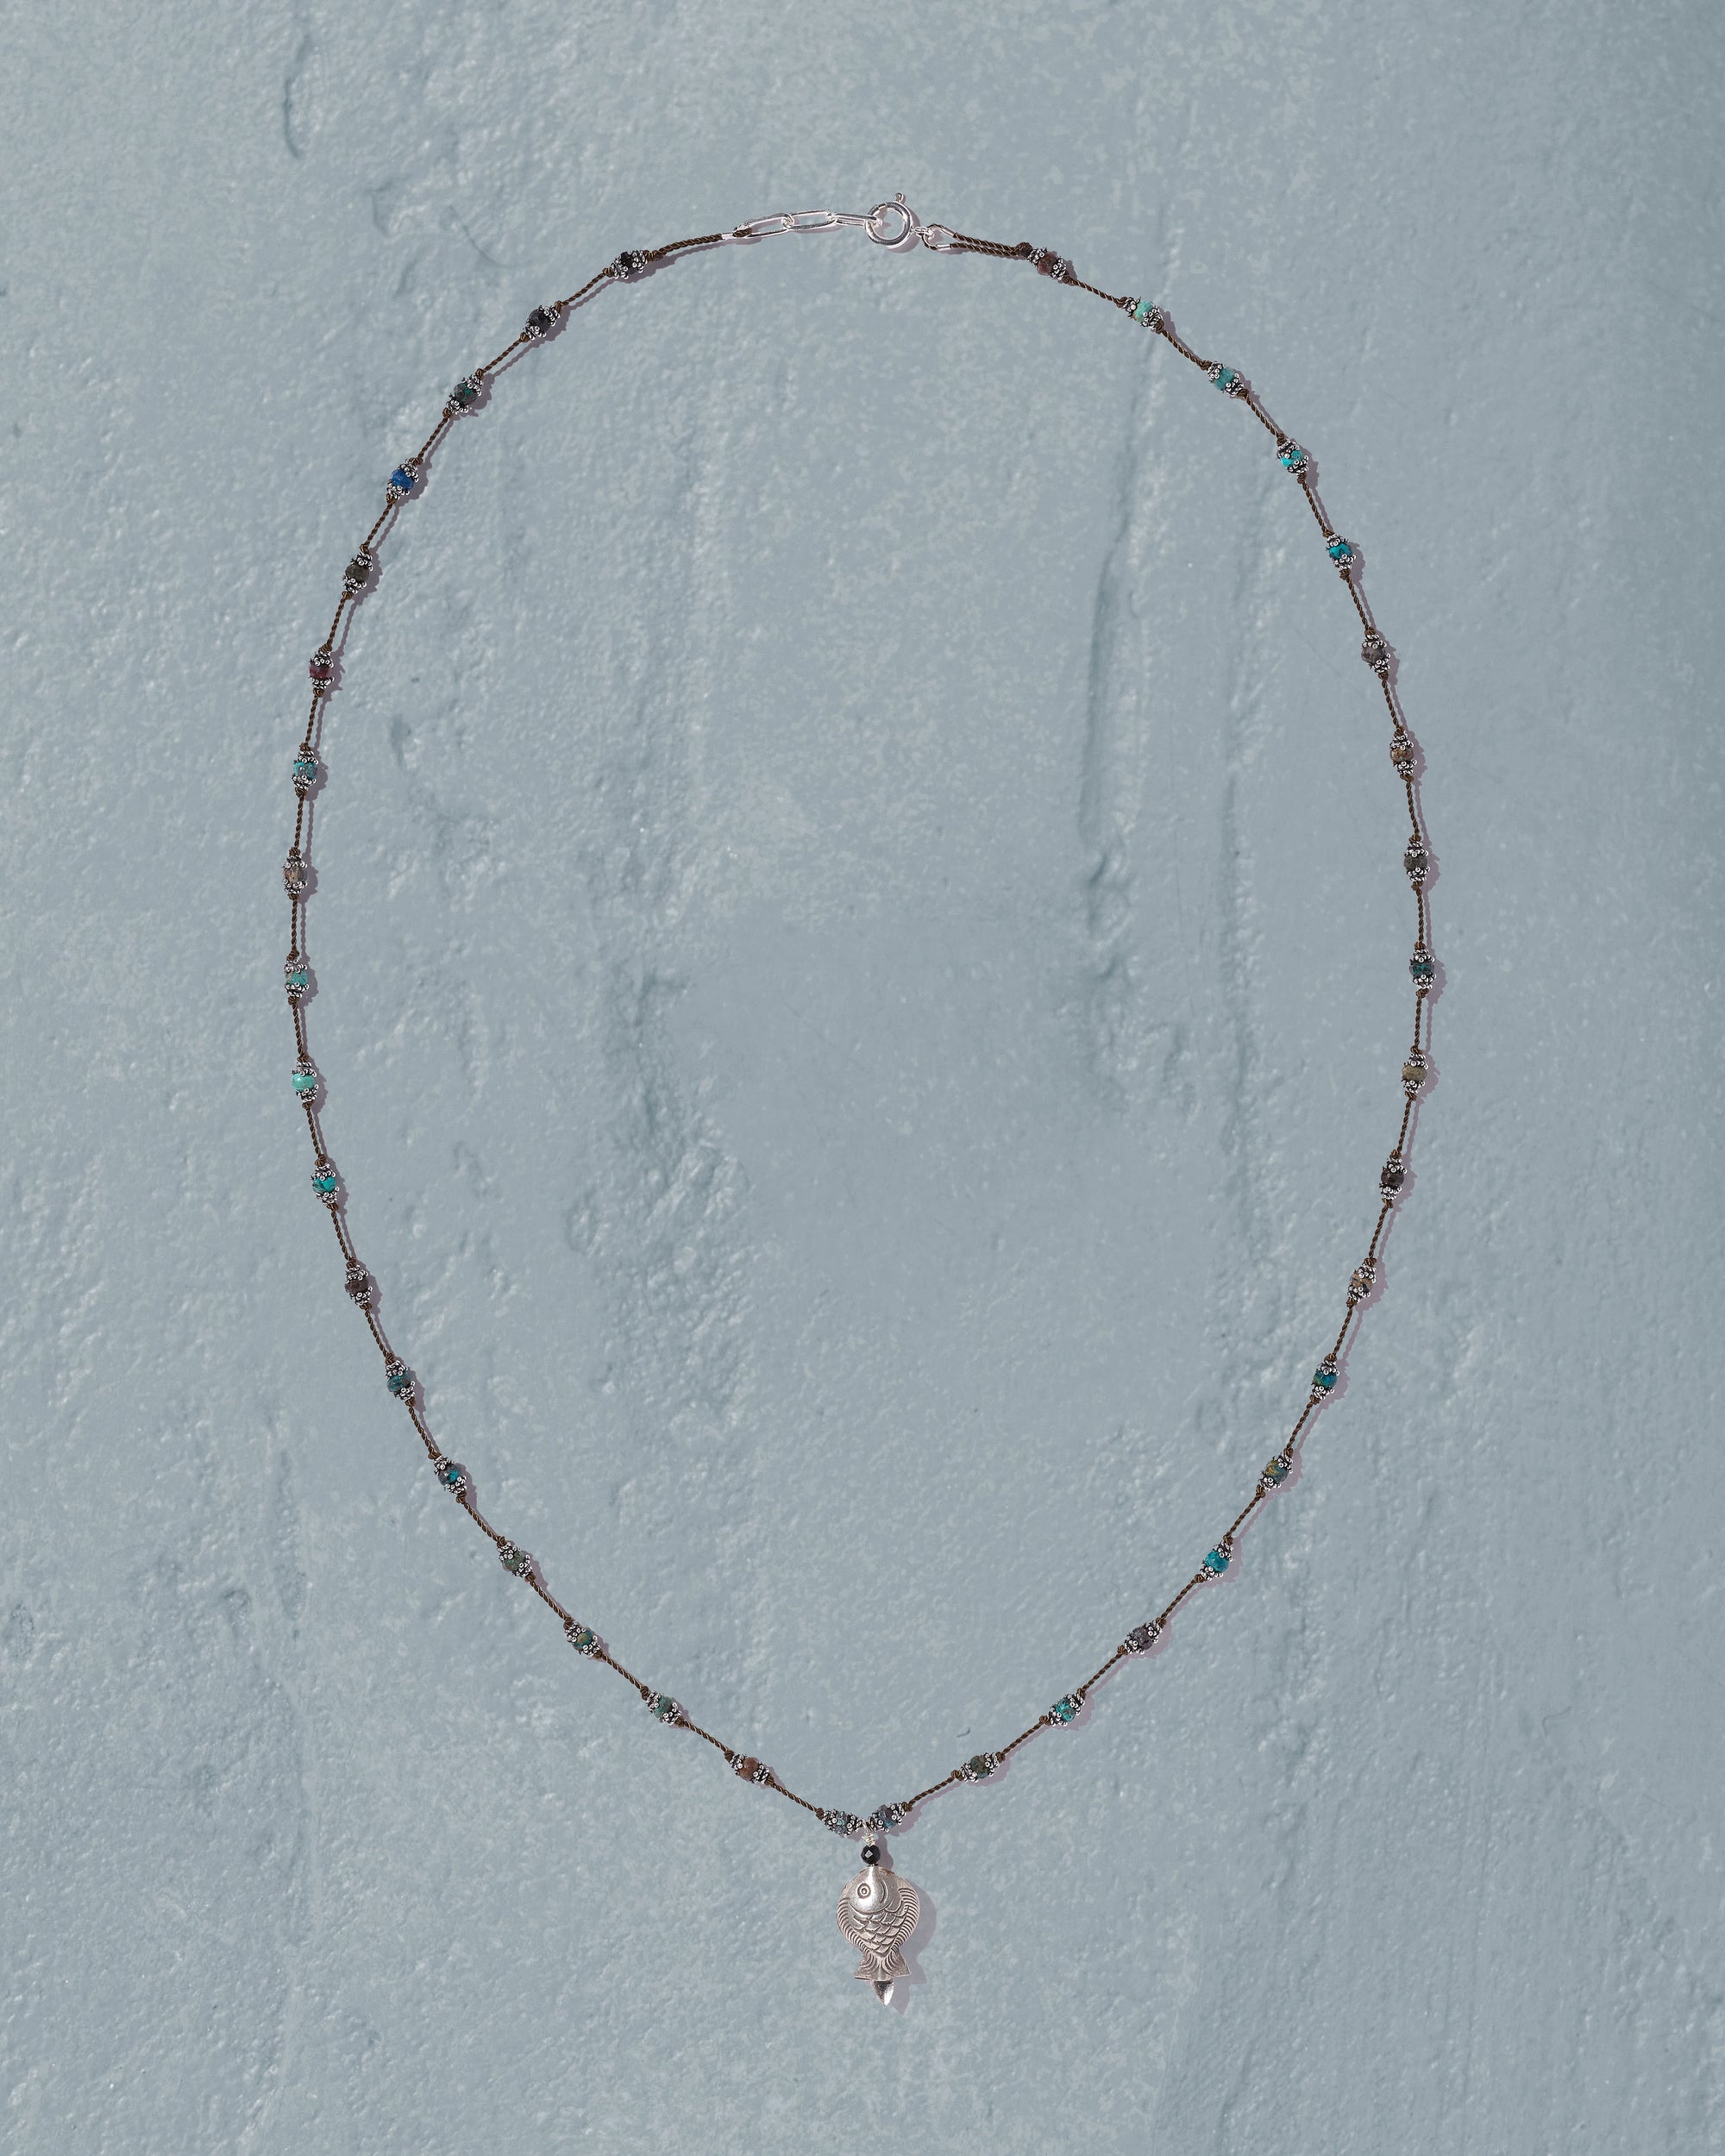 Sole long necklace